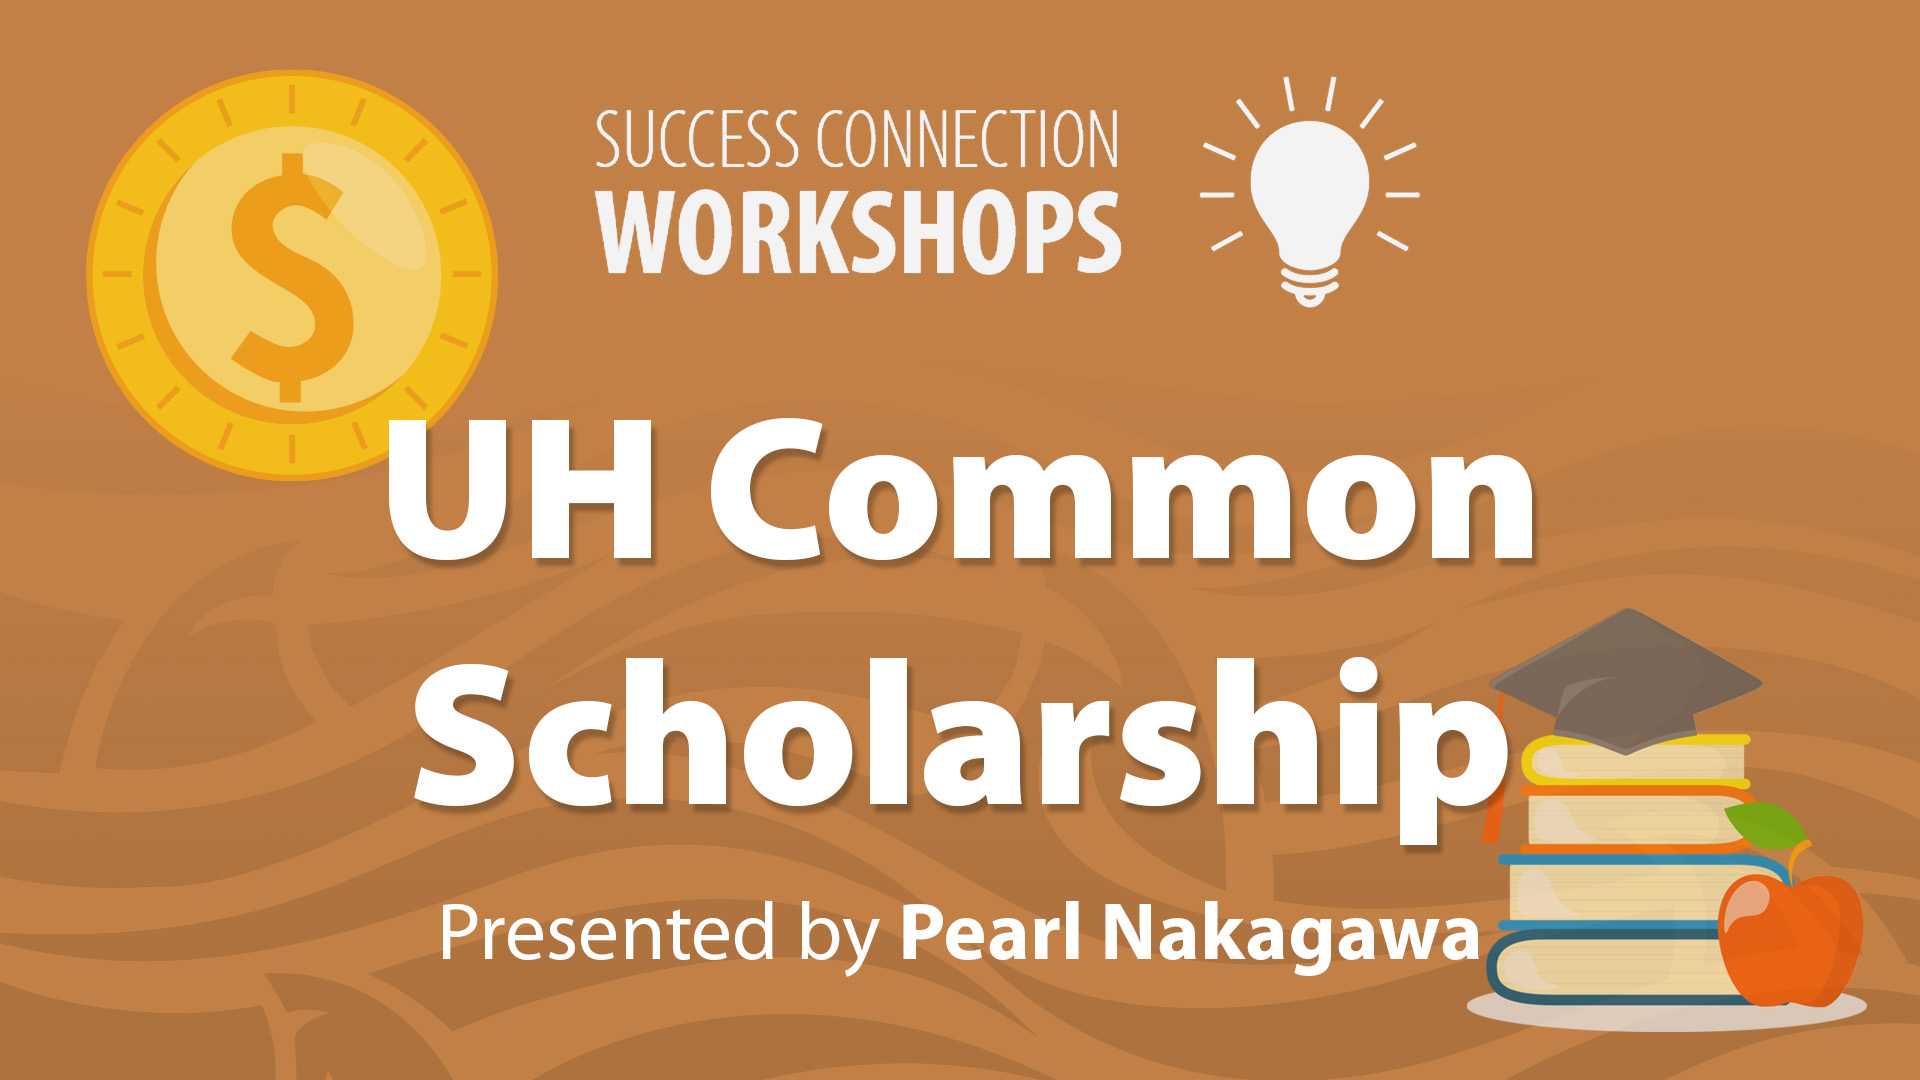 Success Connection Workshops UH Common Scholarship